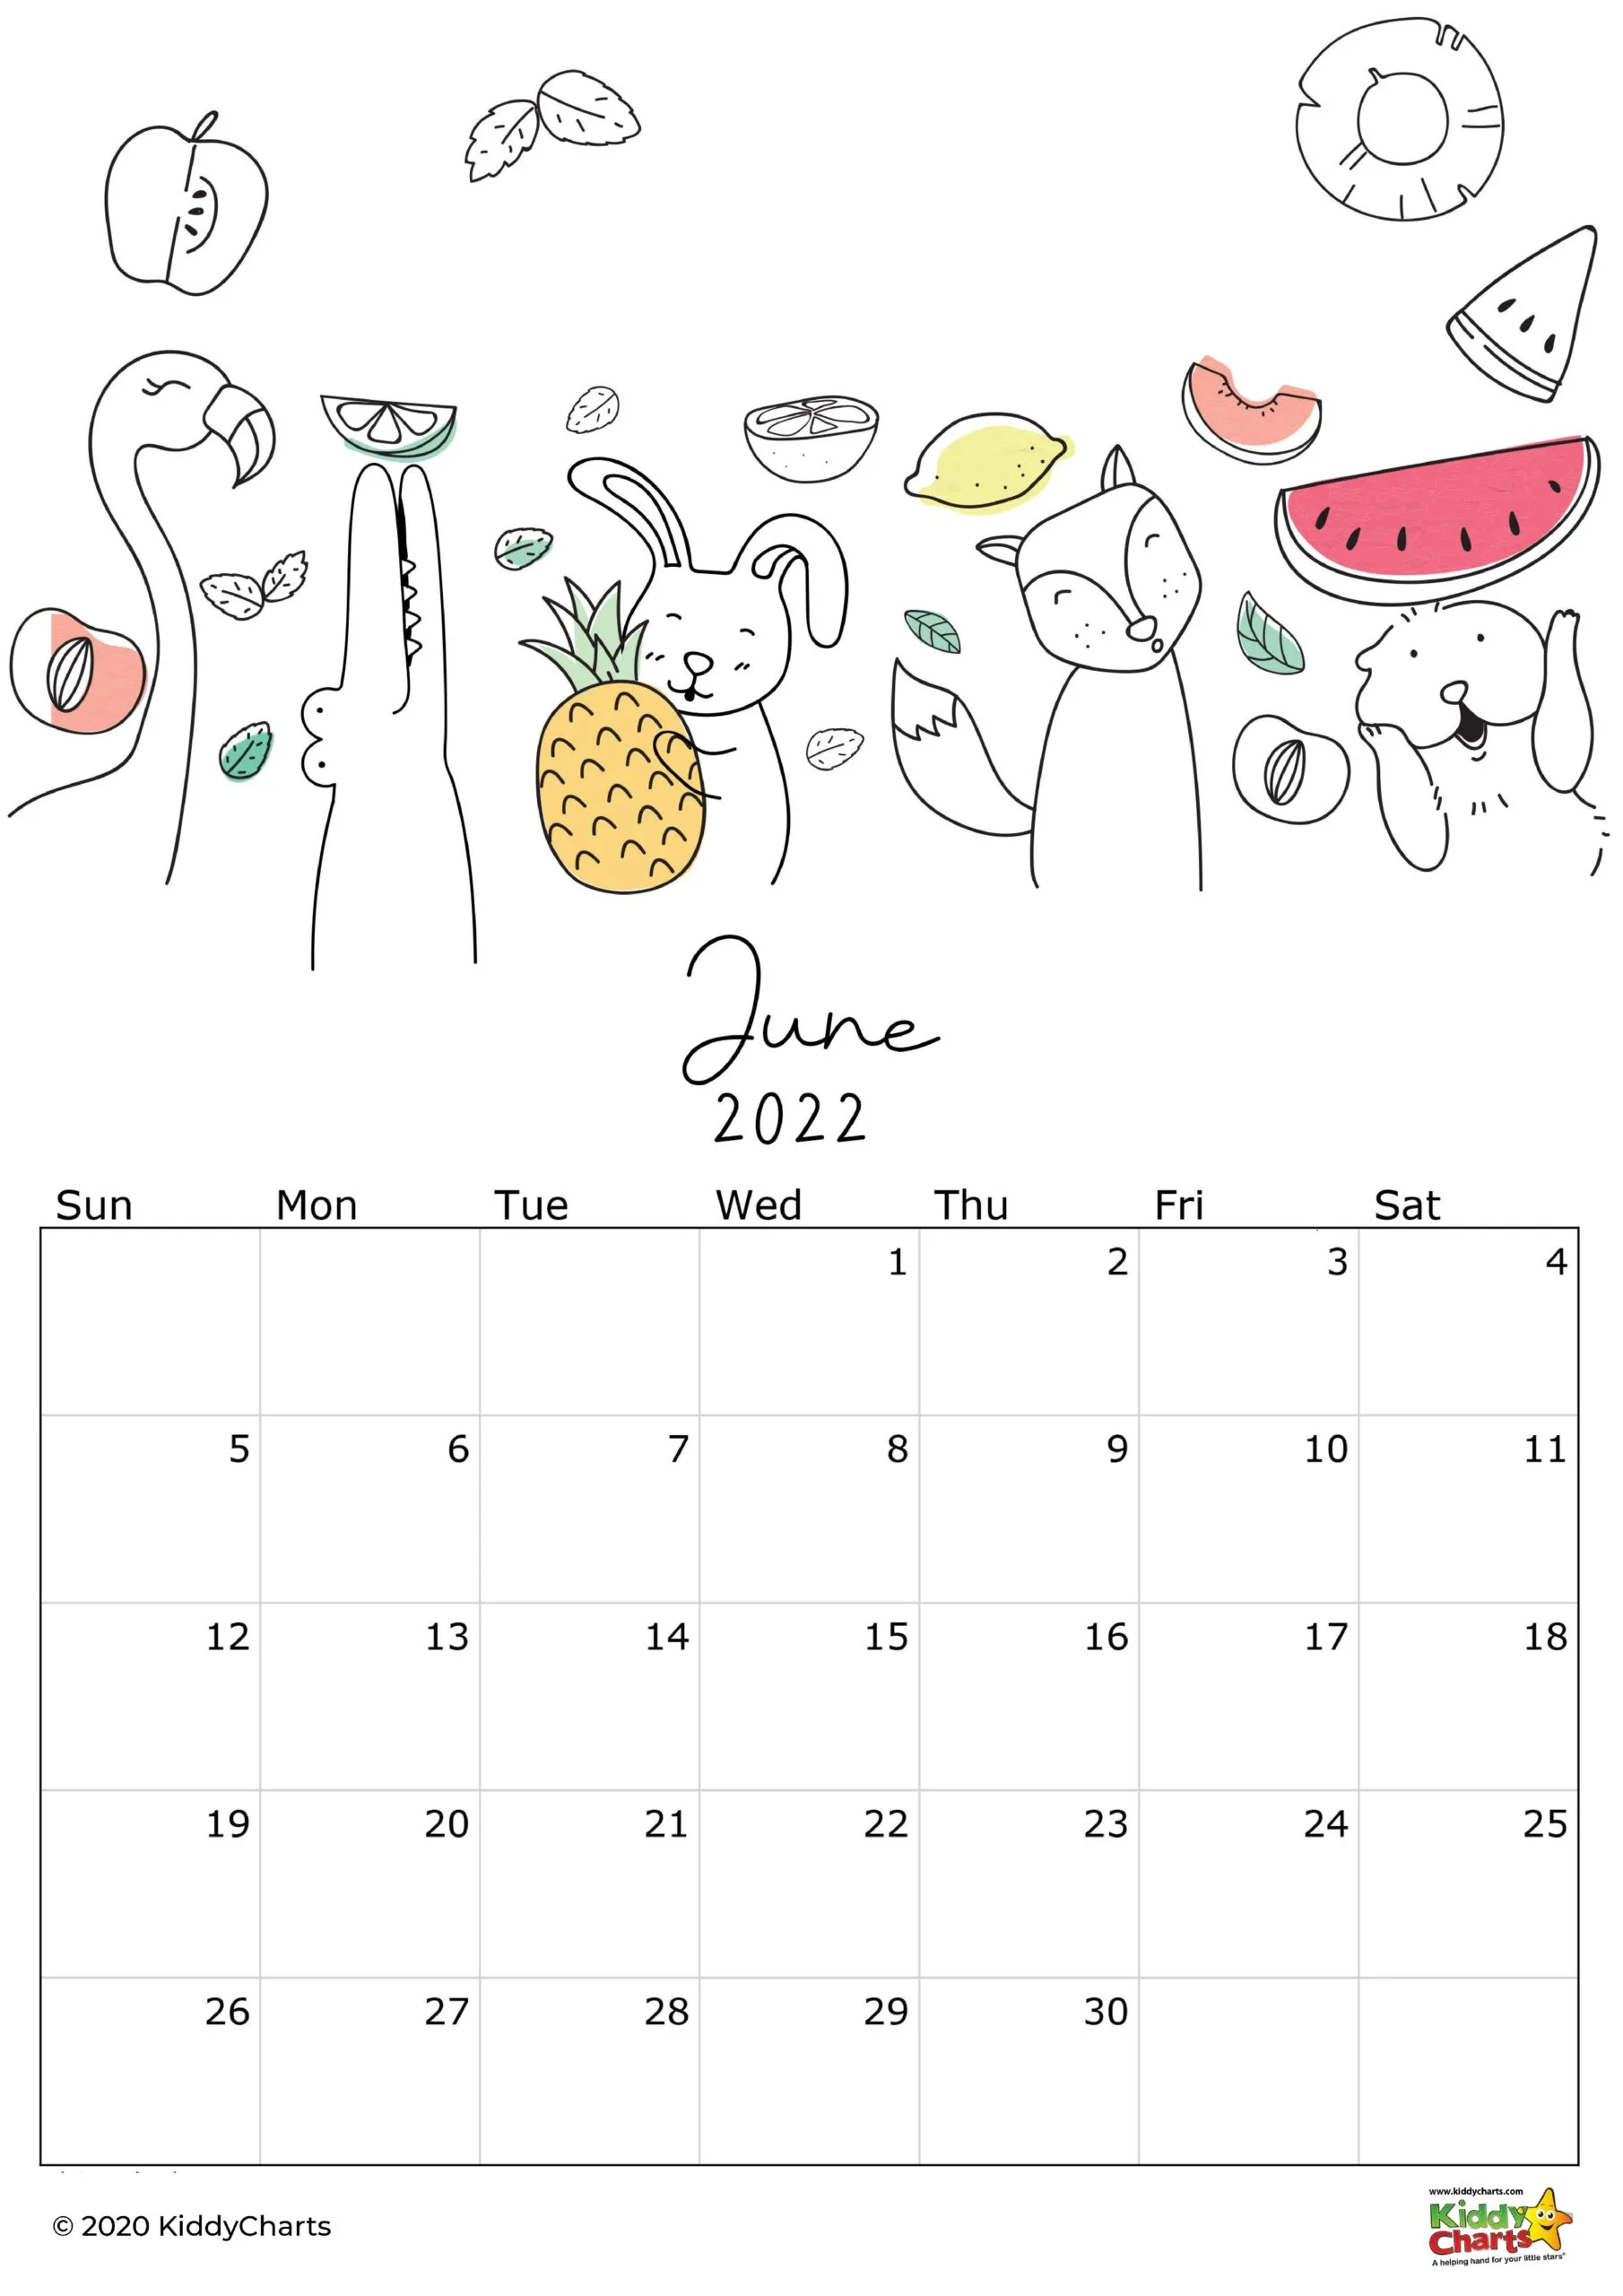 2022 calendar thats printable kids monthly snapshots kiddycharts com